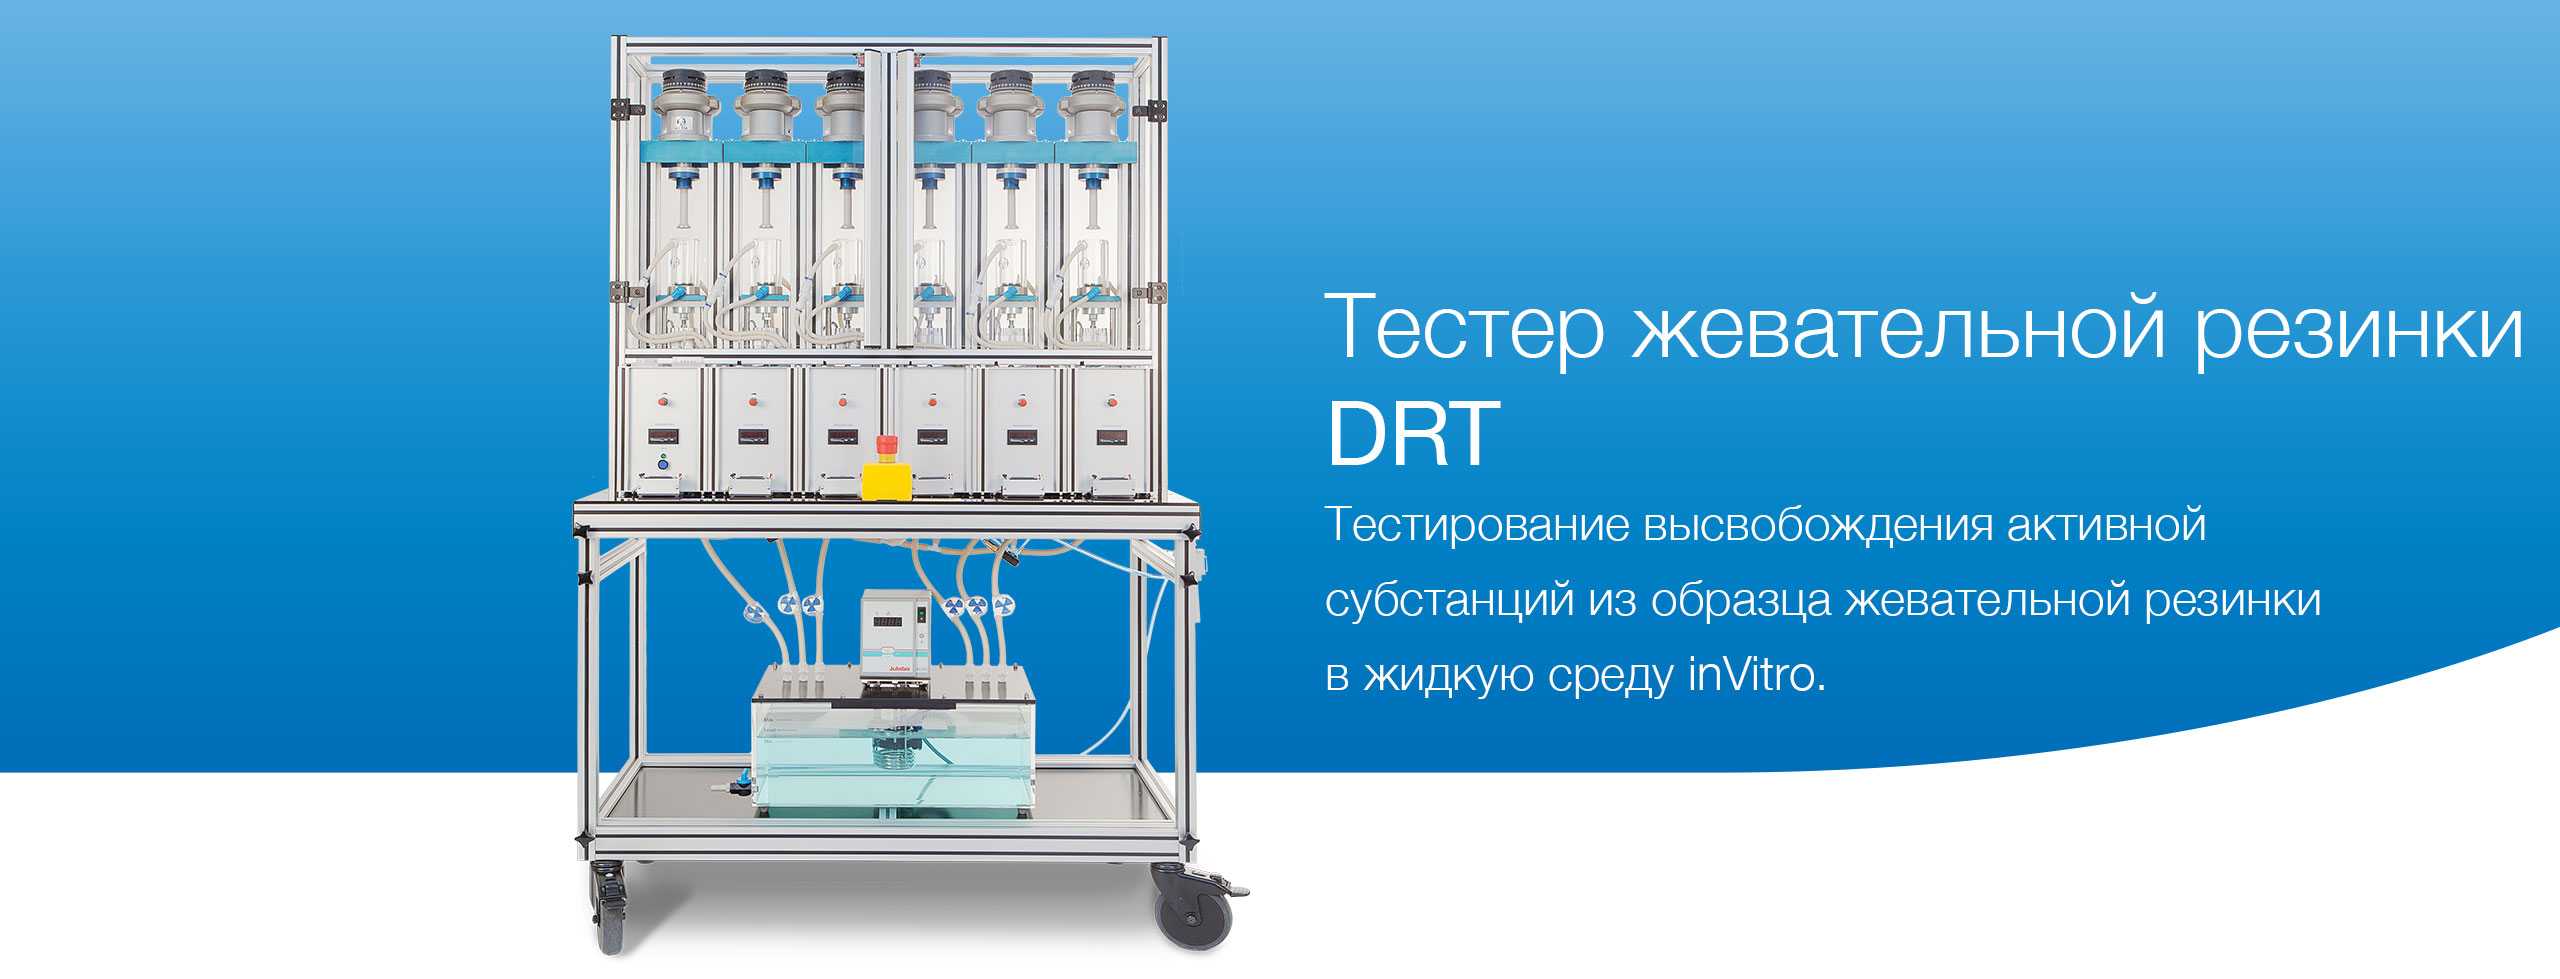 Startbild DRT Product Page